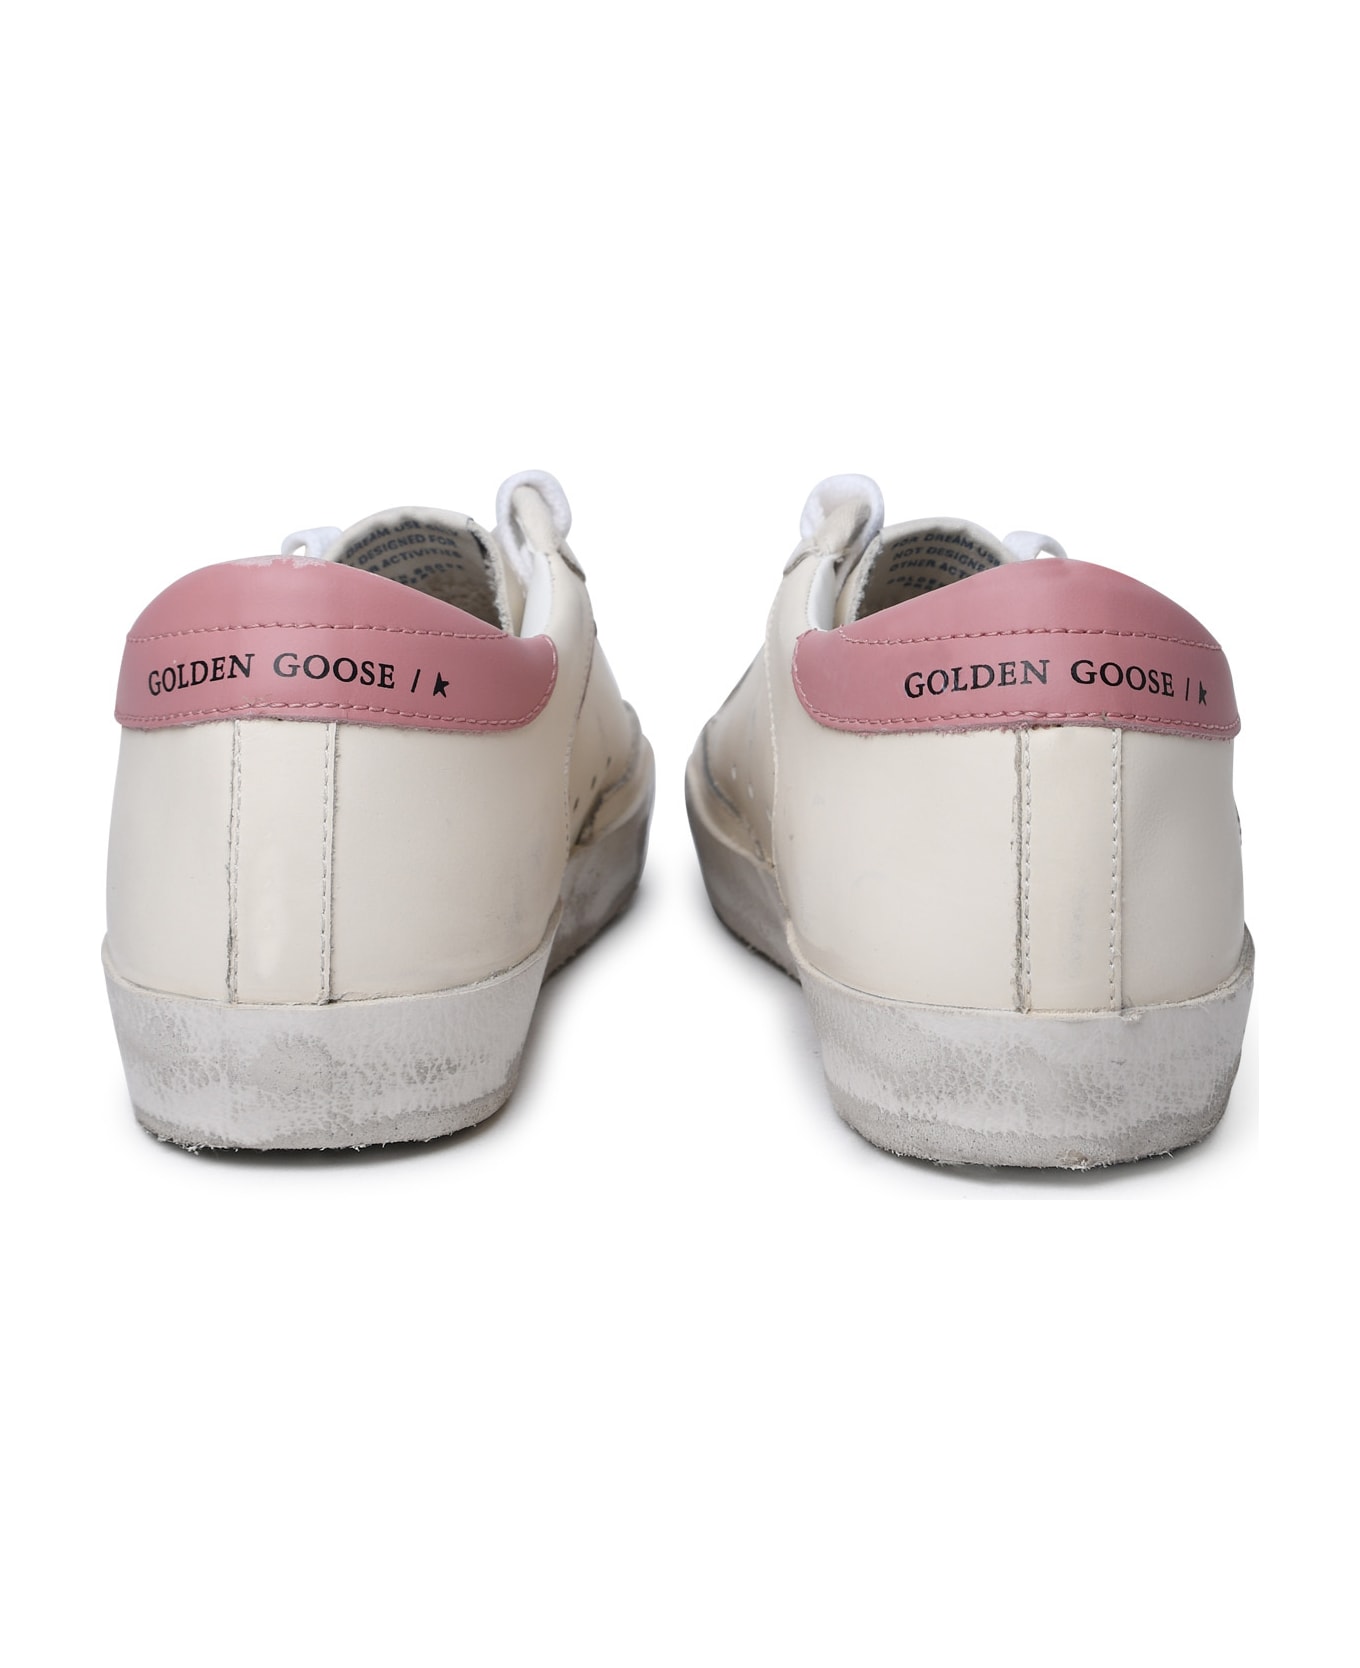 Golden Goose Super-star Leather Upper Suede Star Leather Heel Sneakers - Cream Seedpearl Ash Rose スニーカー